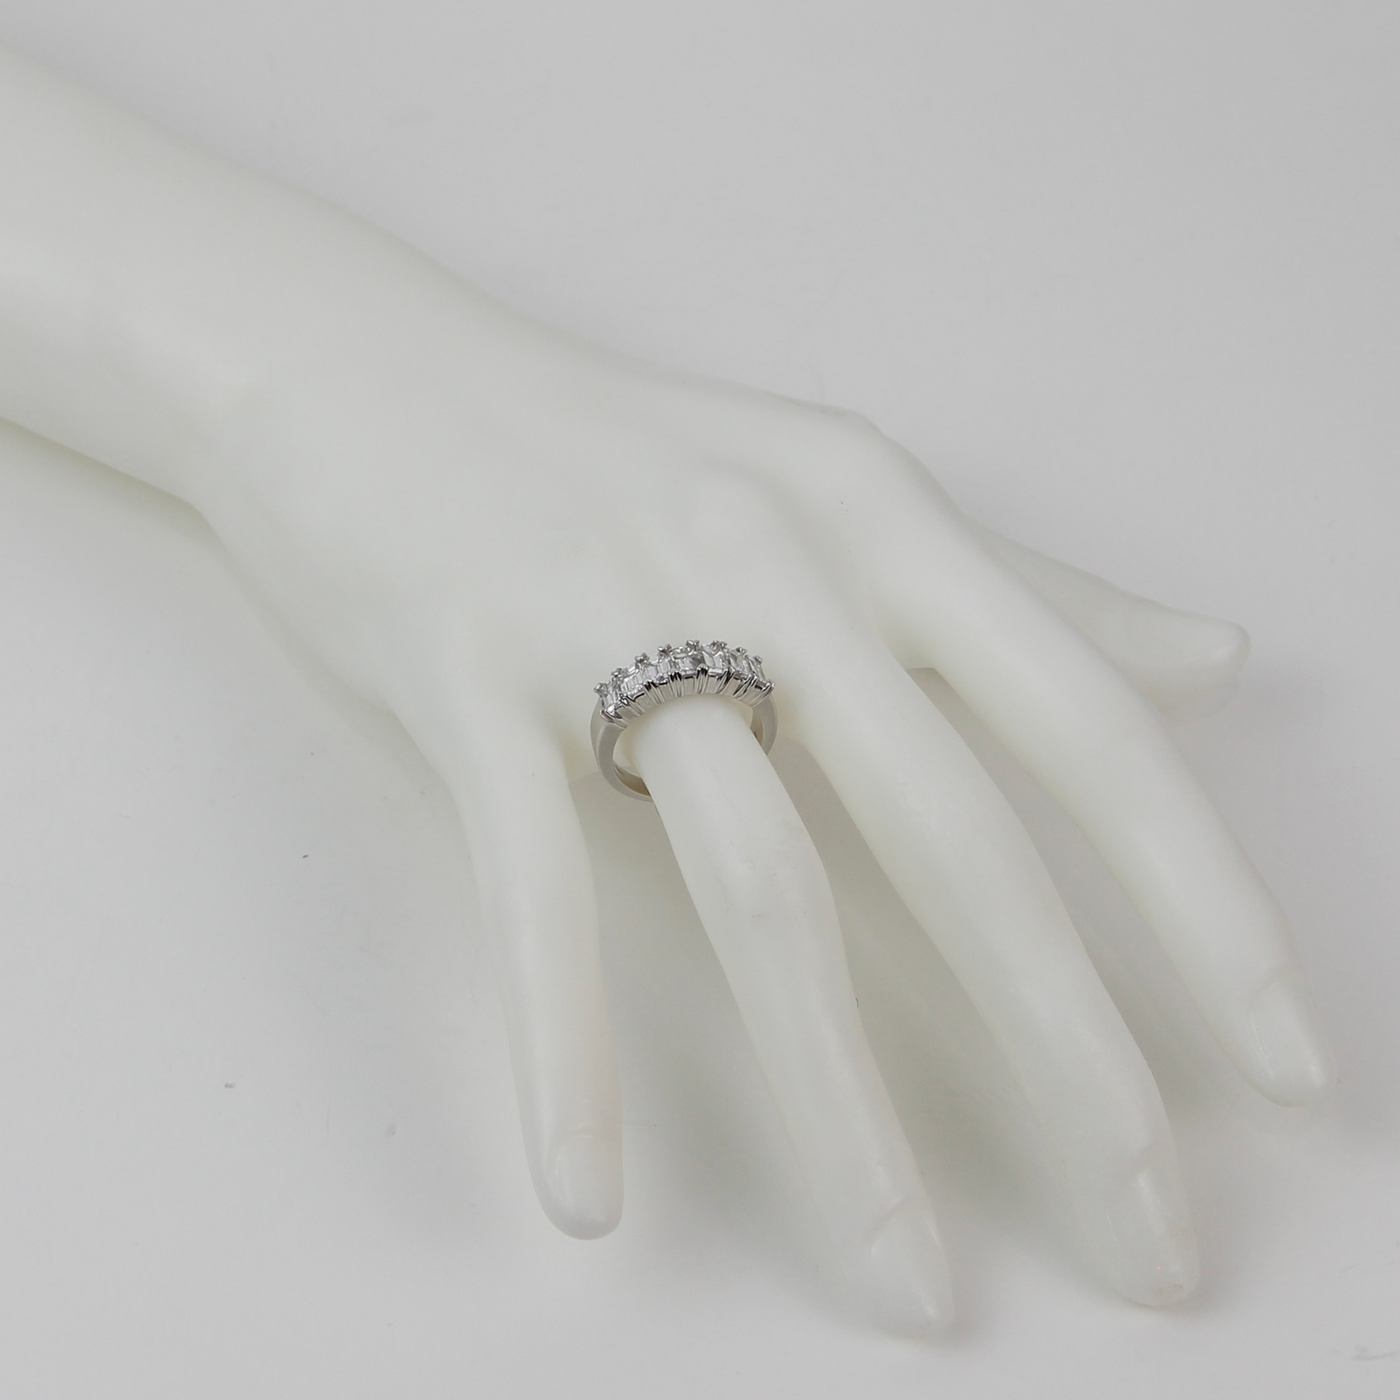 ECJ Collection 18K White Gold Wedding Band 1.93ctw Diamond Ring